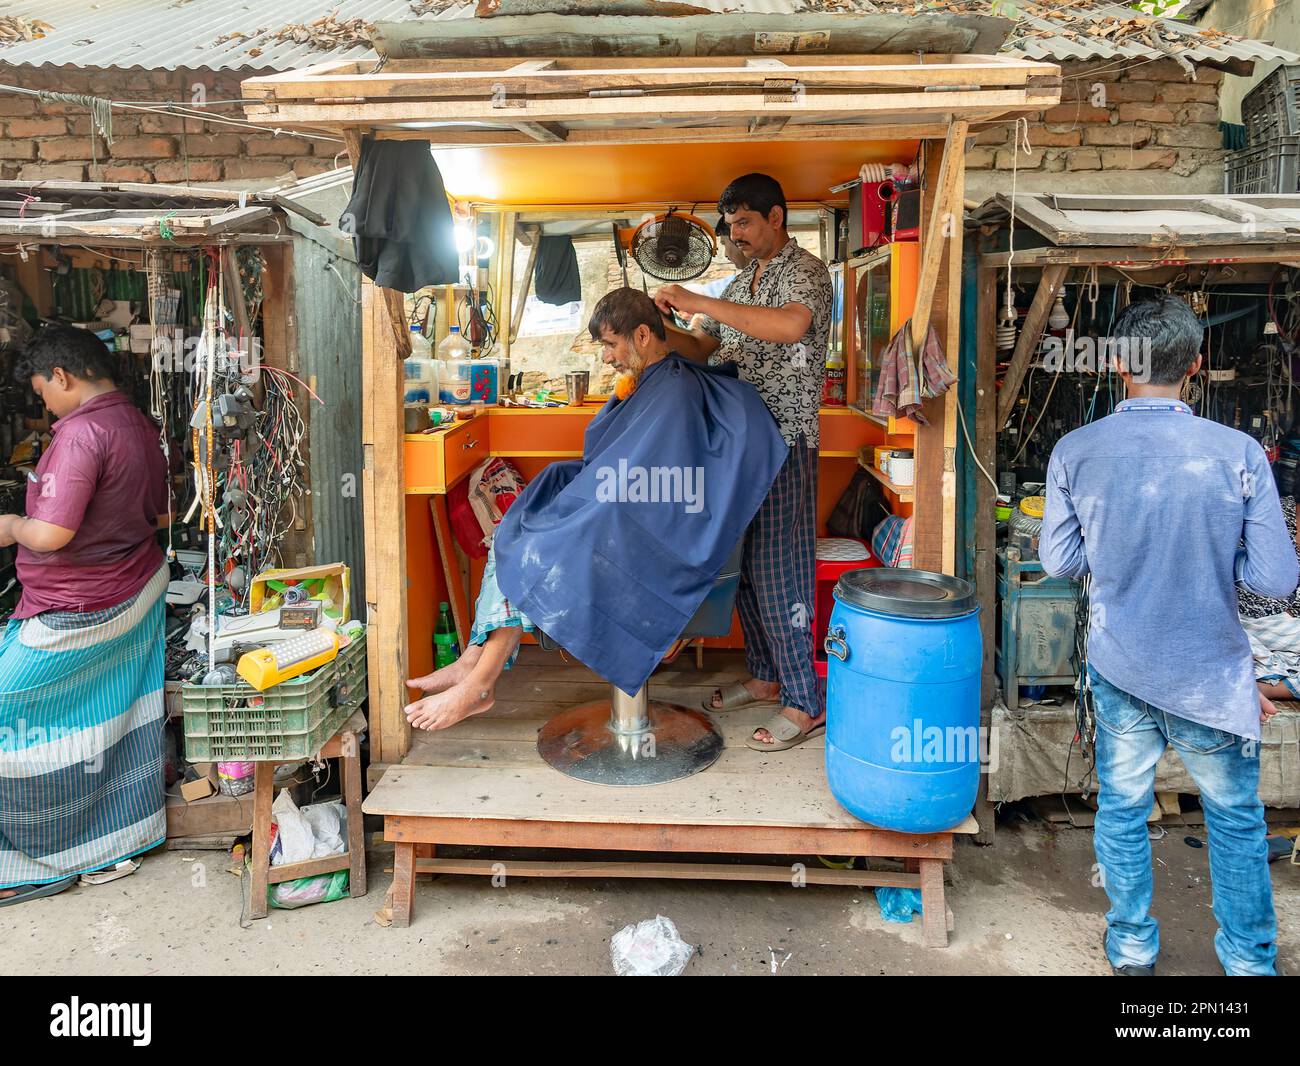 Man getting his hair cut at a tiny barbershop in Dhaka, the capital of Bangladesh. Stock Photo